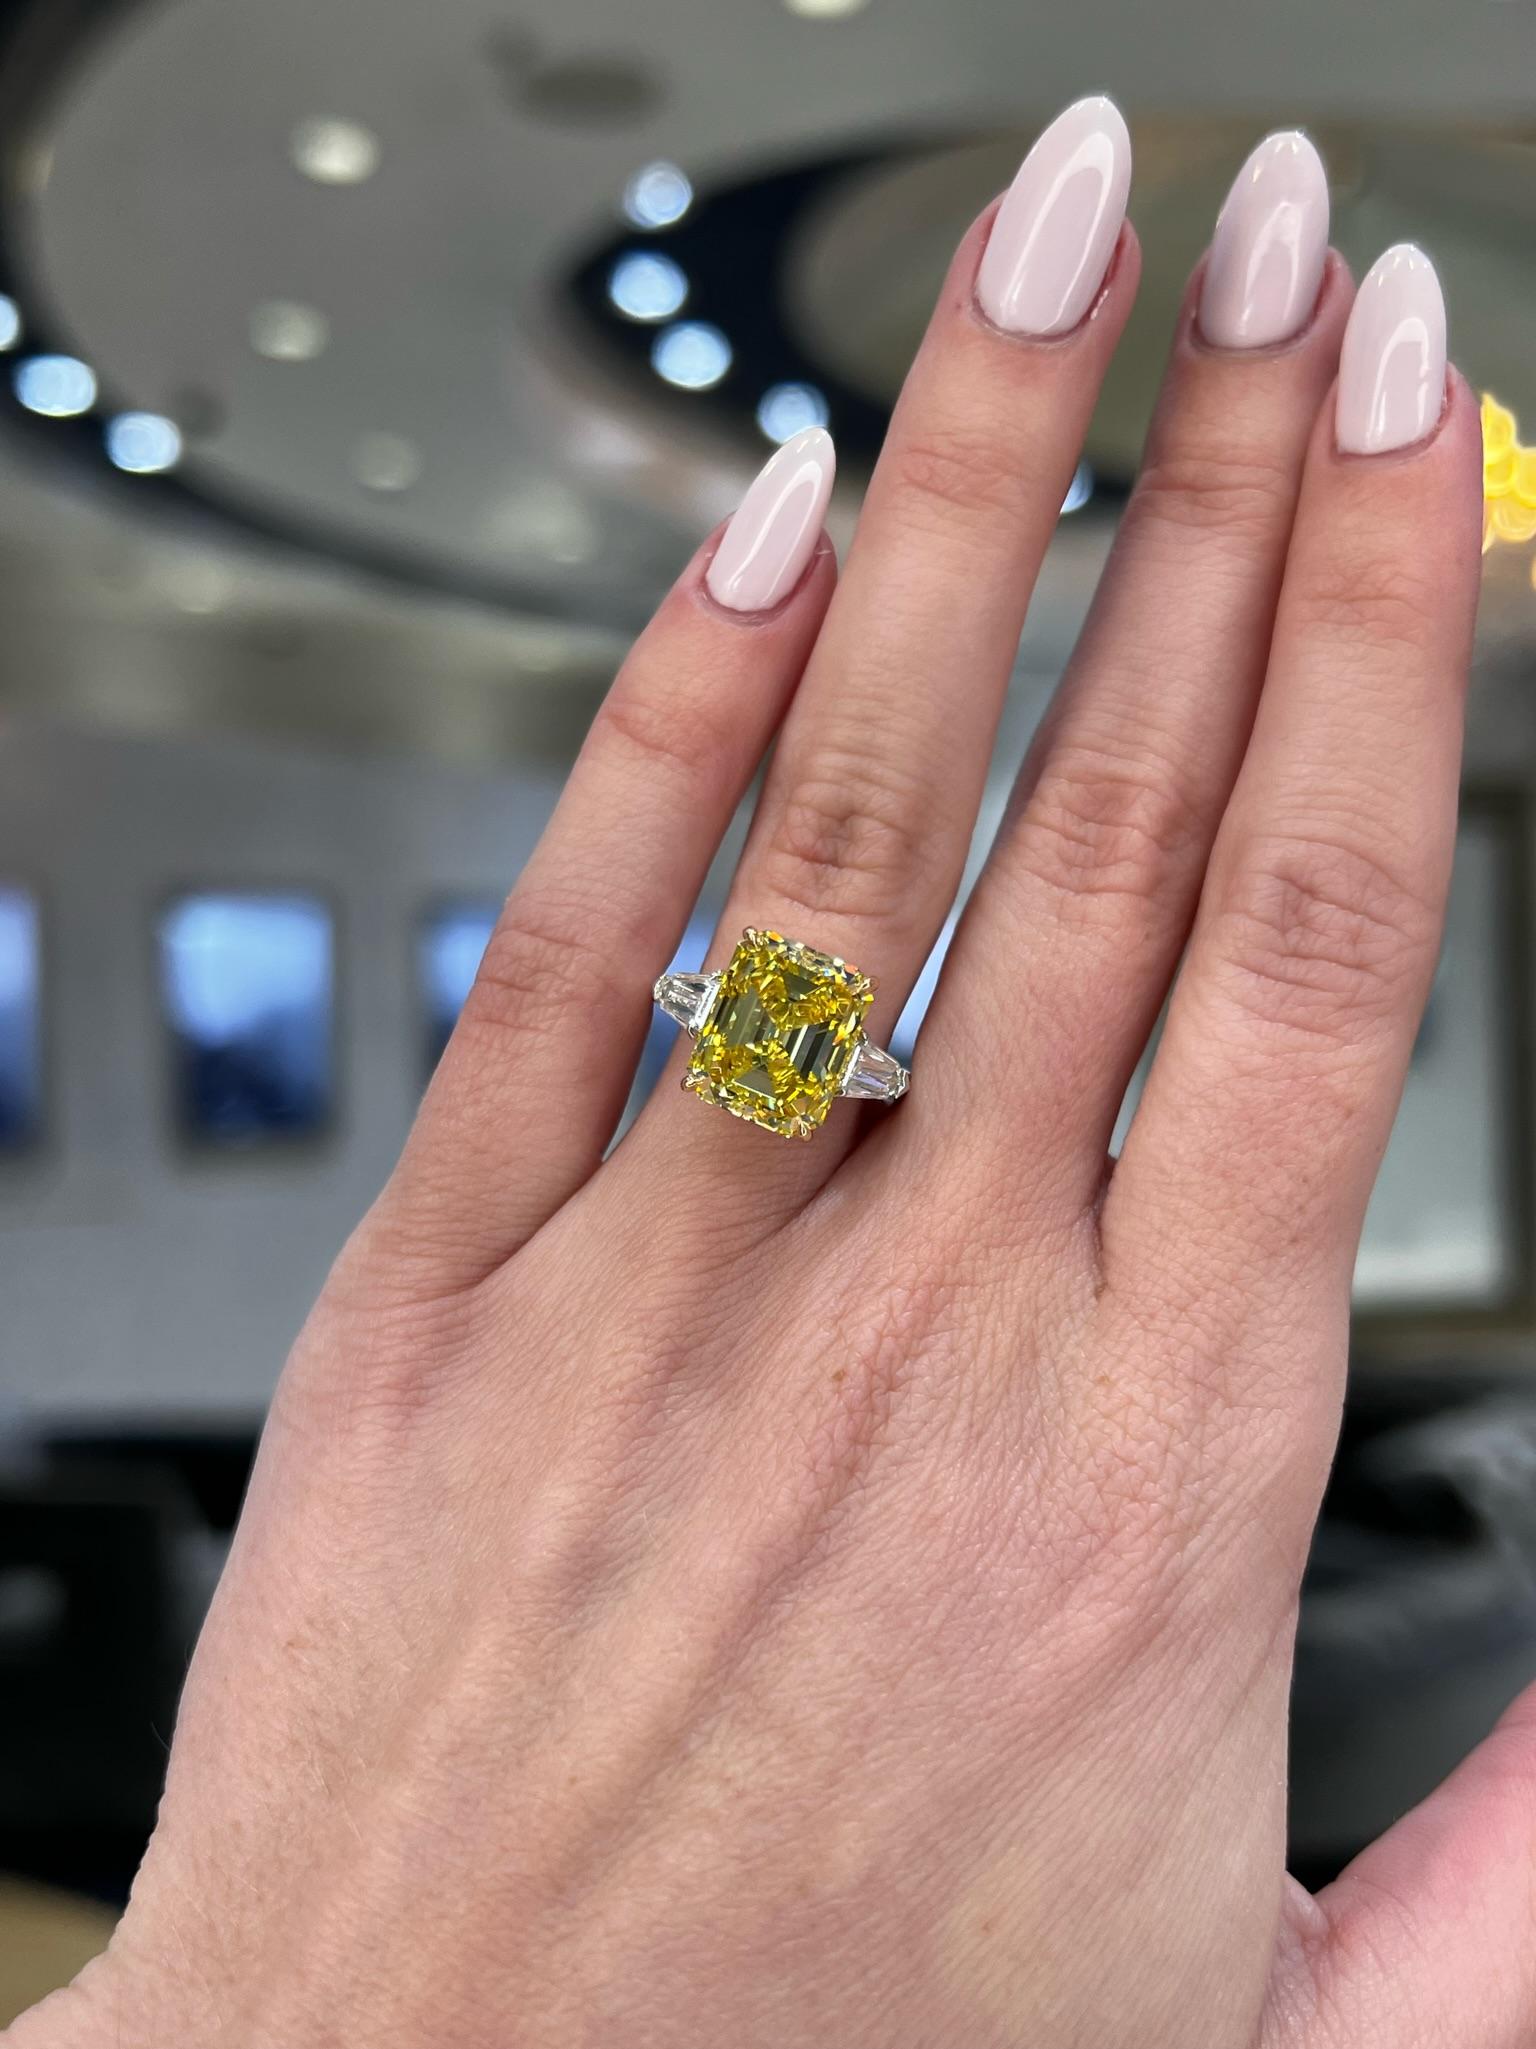 David Rosenberg 6.40ct Emerald Fancy Vivid Yellow GIA Diamond Engagement Ring For Sale 1